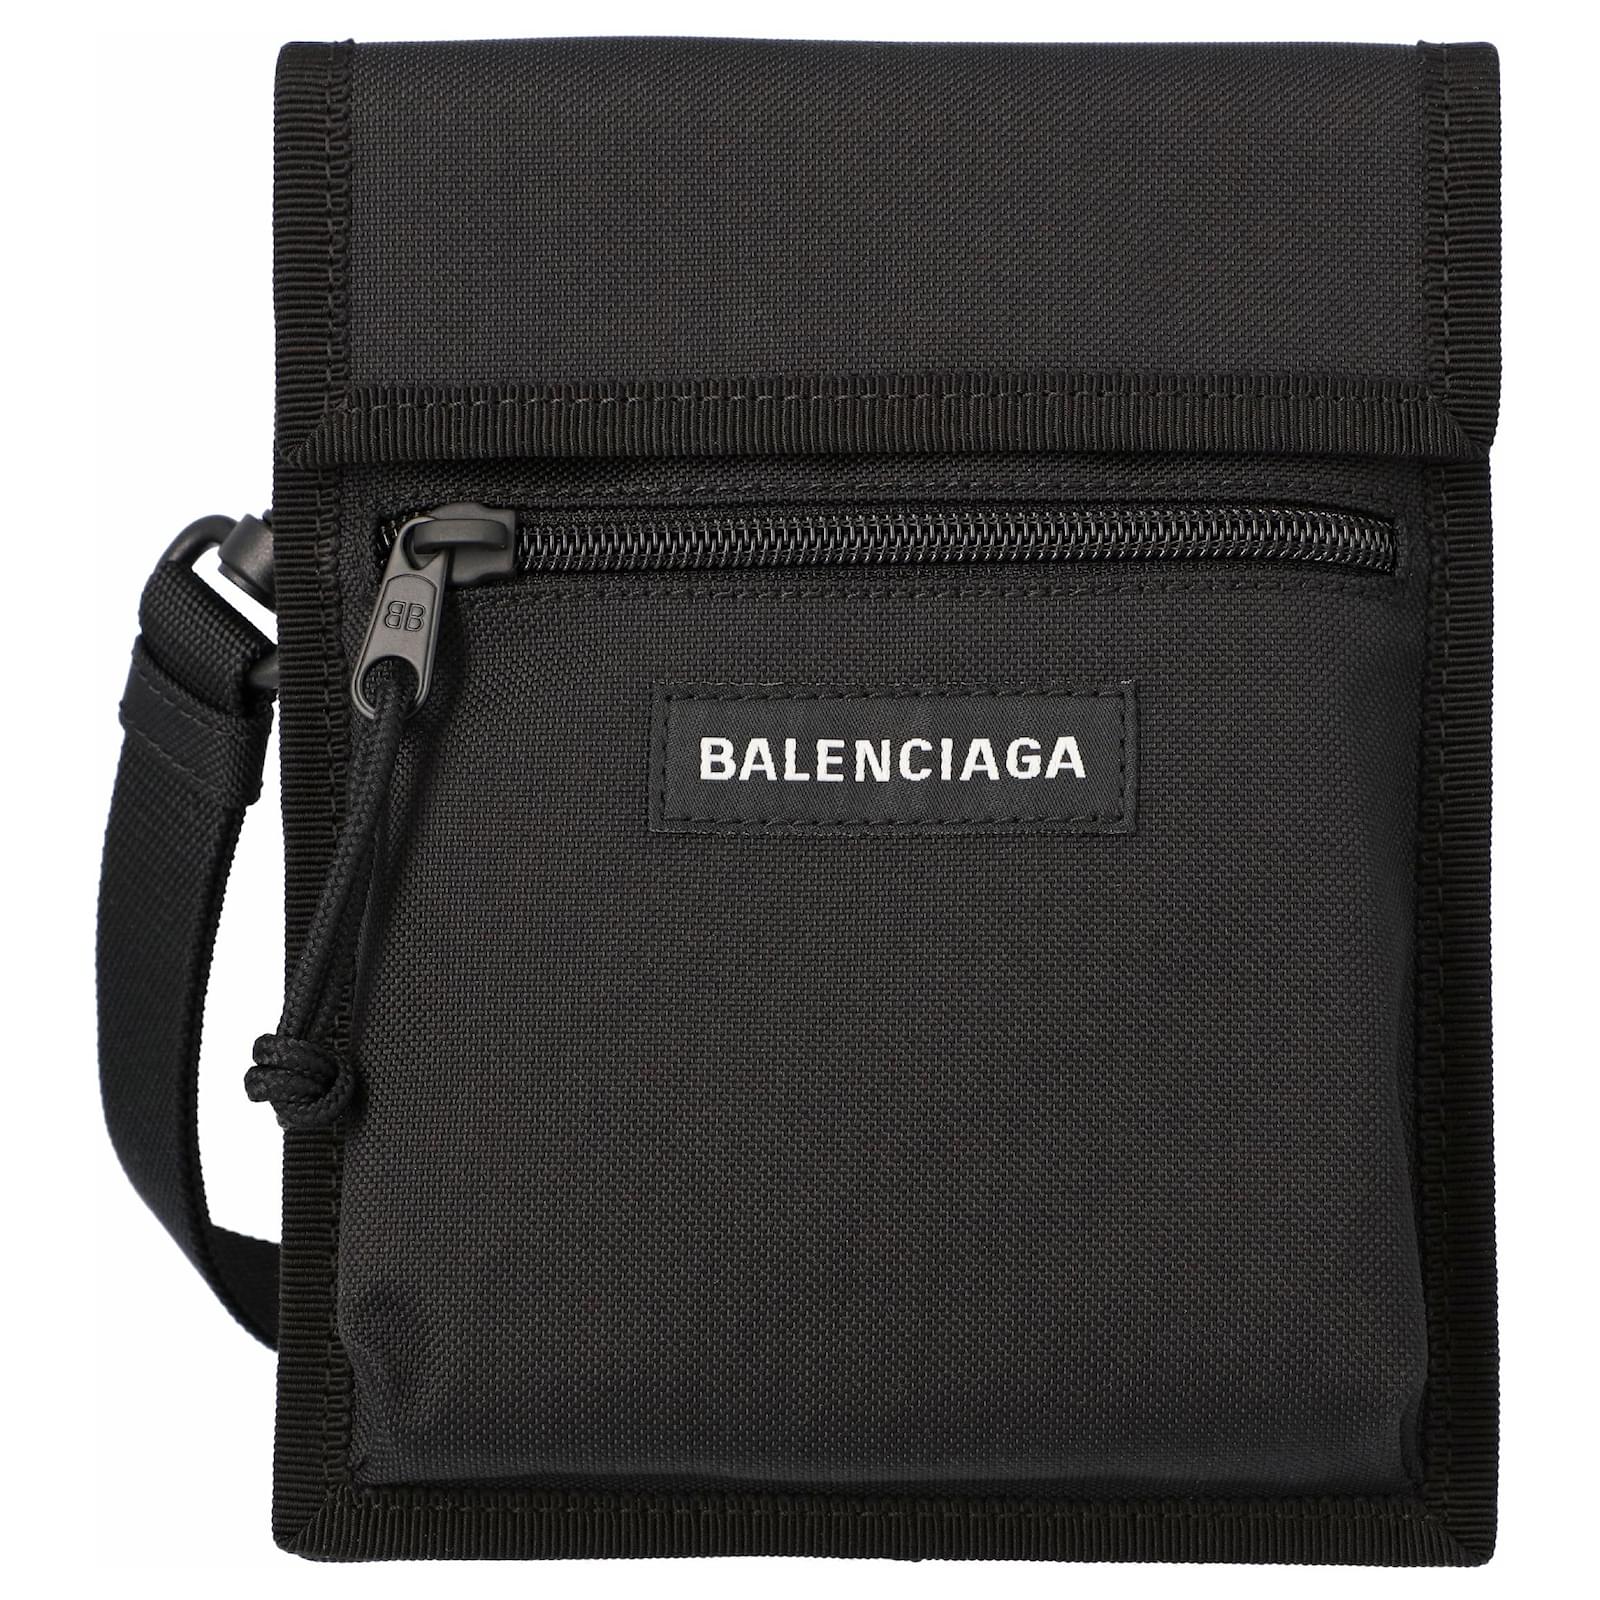 SASOM  Balenciaga Explorer Leather Crossbody Pouch Bag